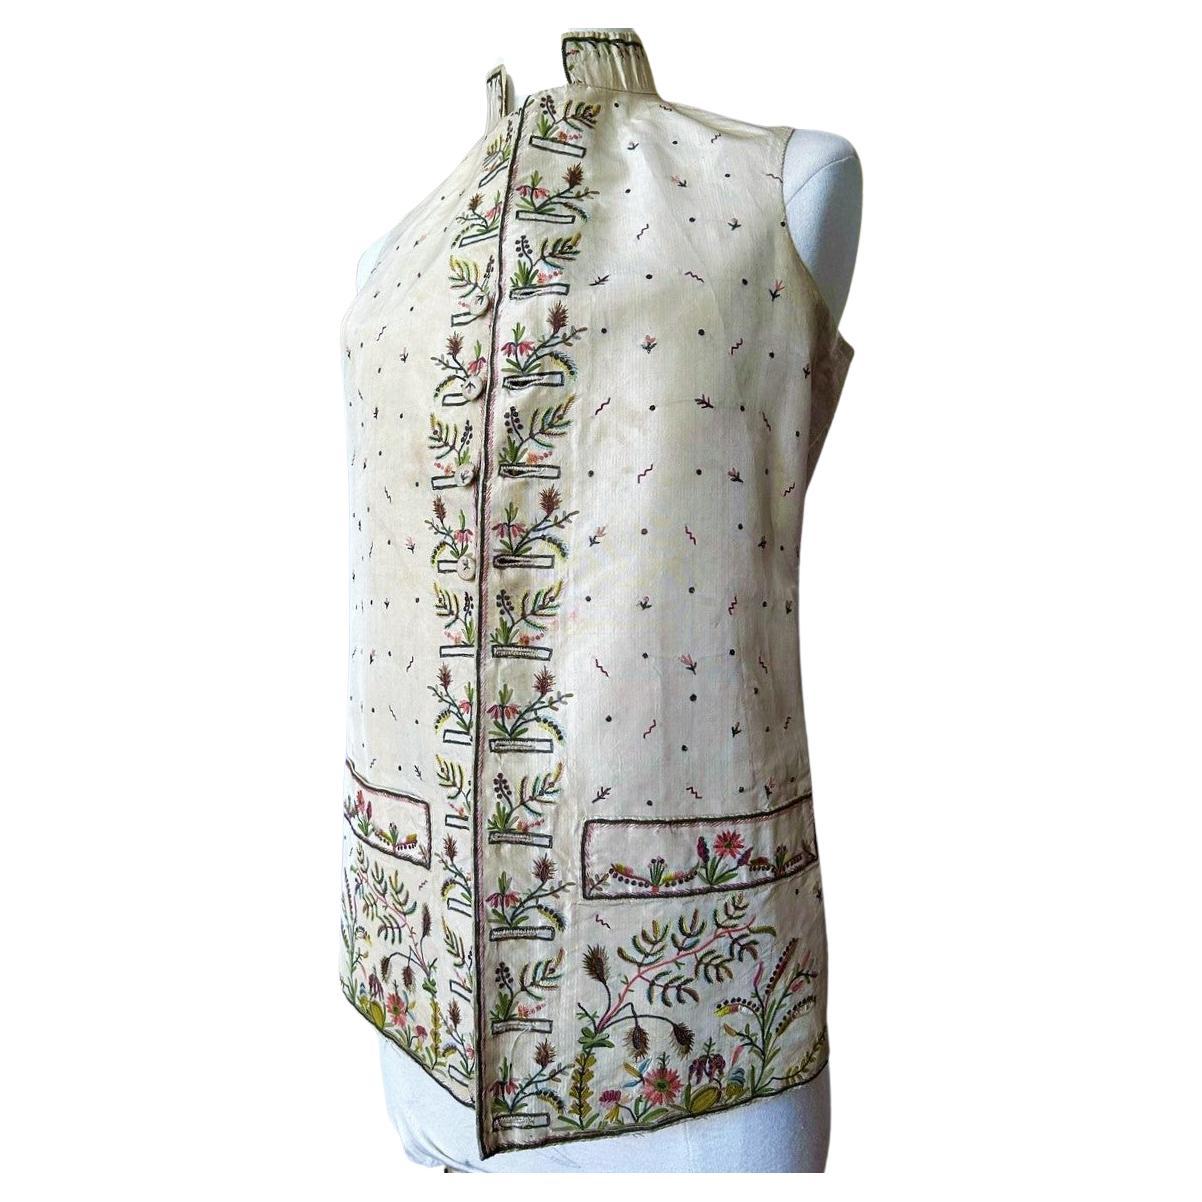 Bestickte Taft-Taft-Taft-Taft-Taft-Mantel im Stil Louis XVI., Frankreich um 1785